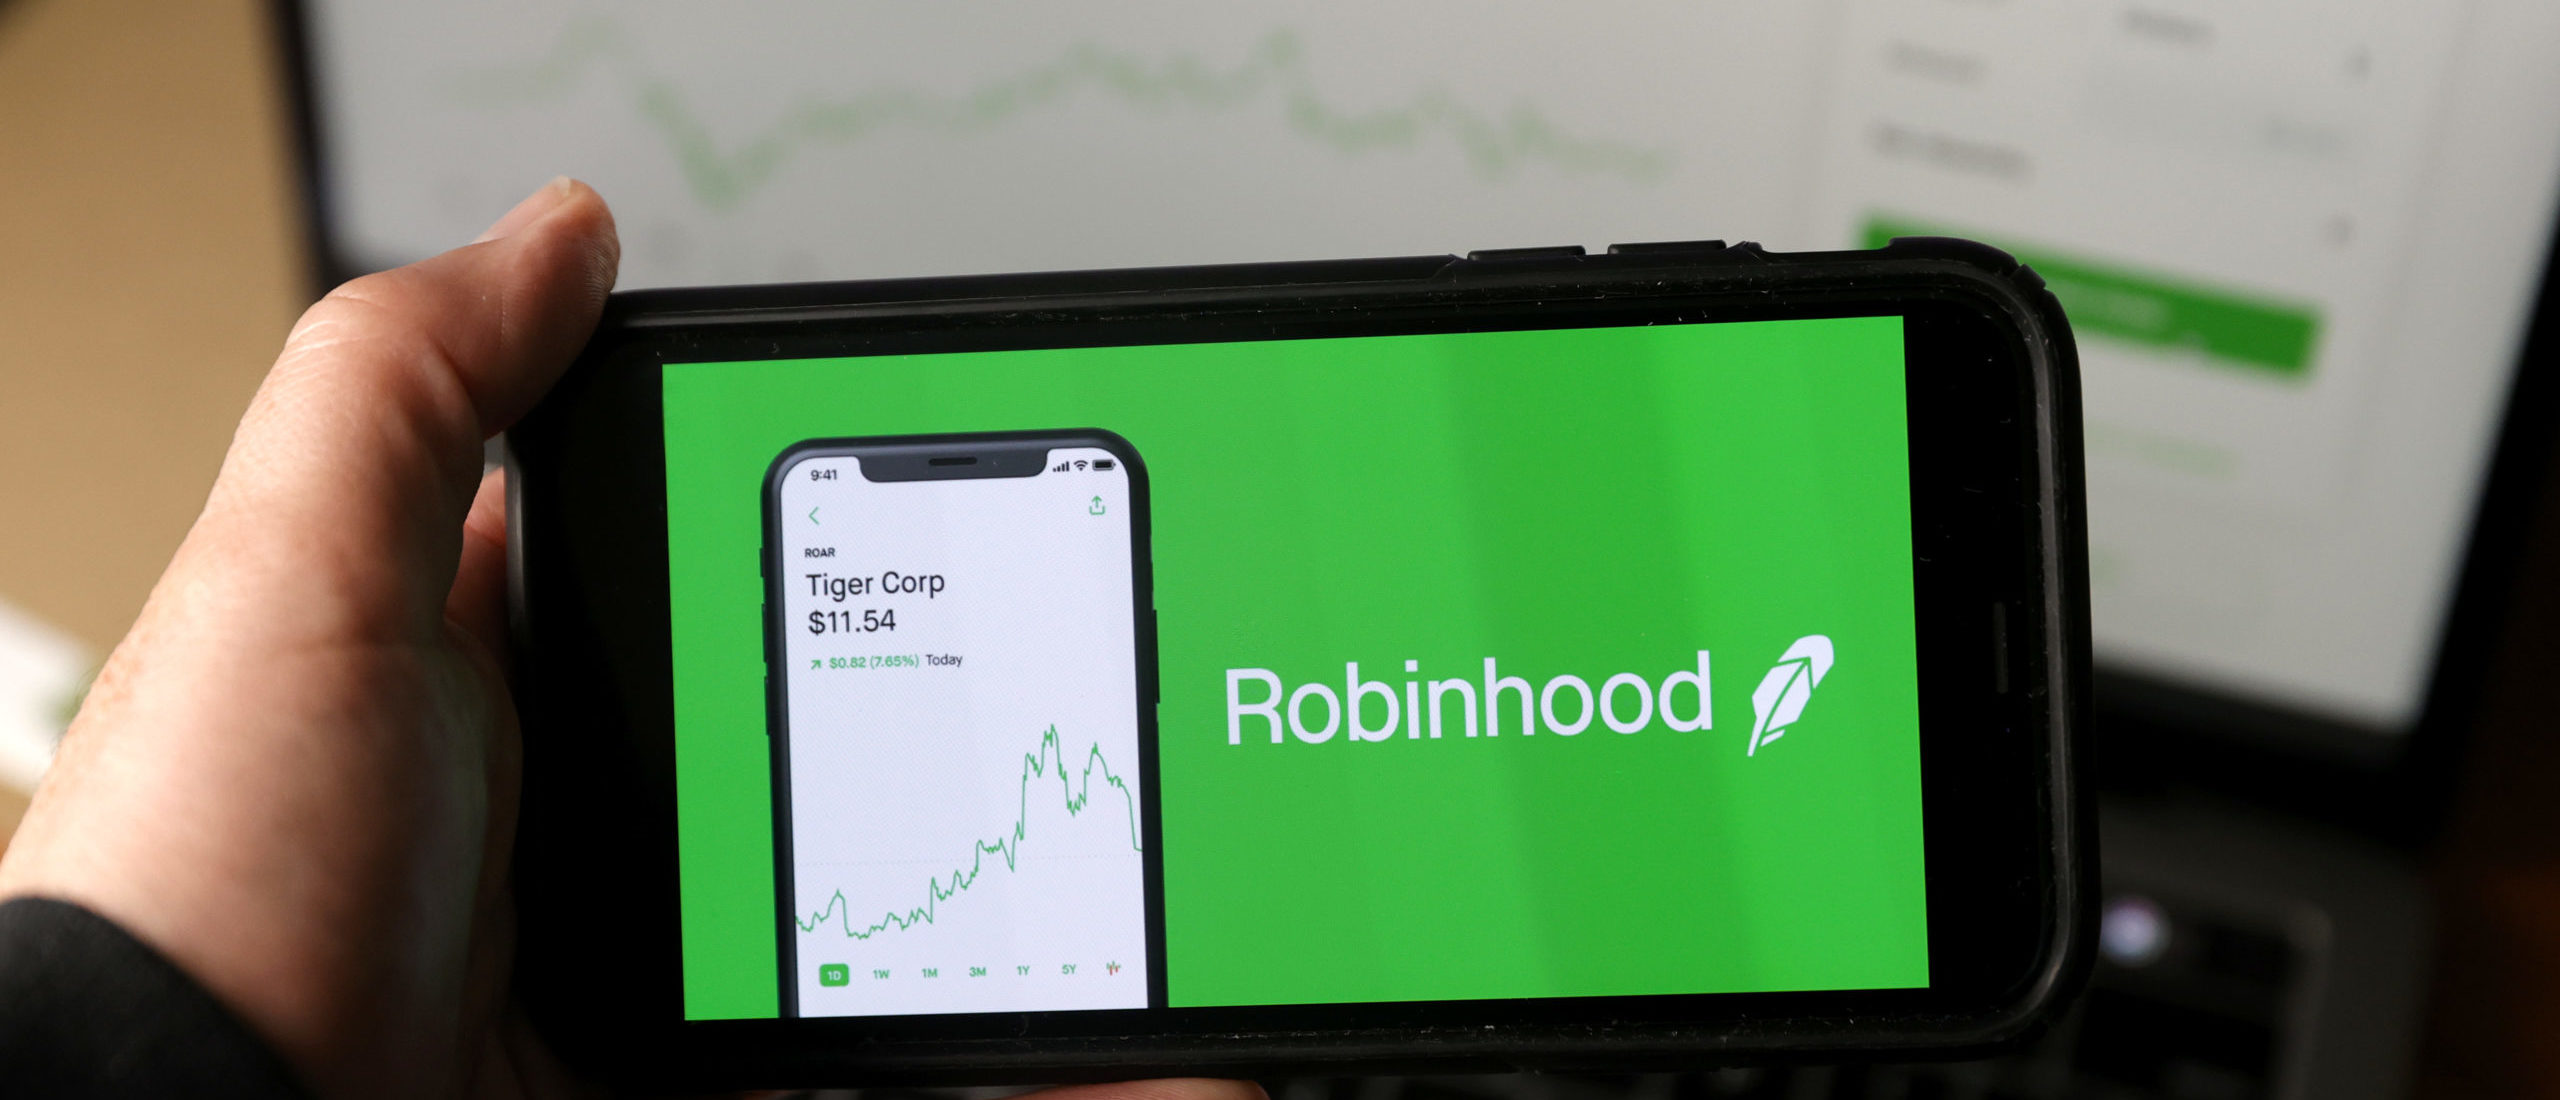 robinhood app penny stocks